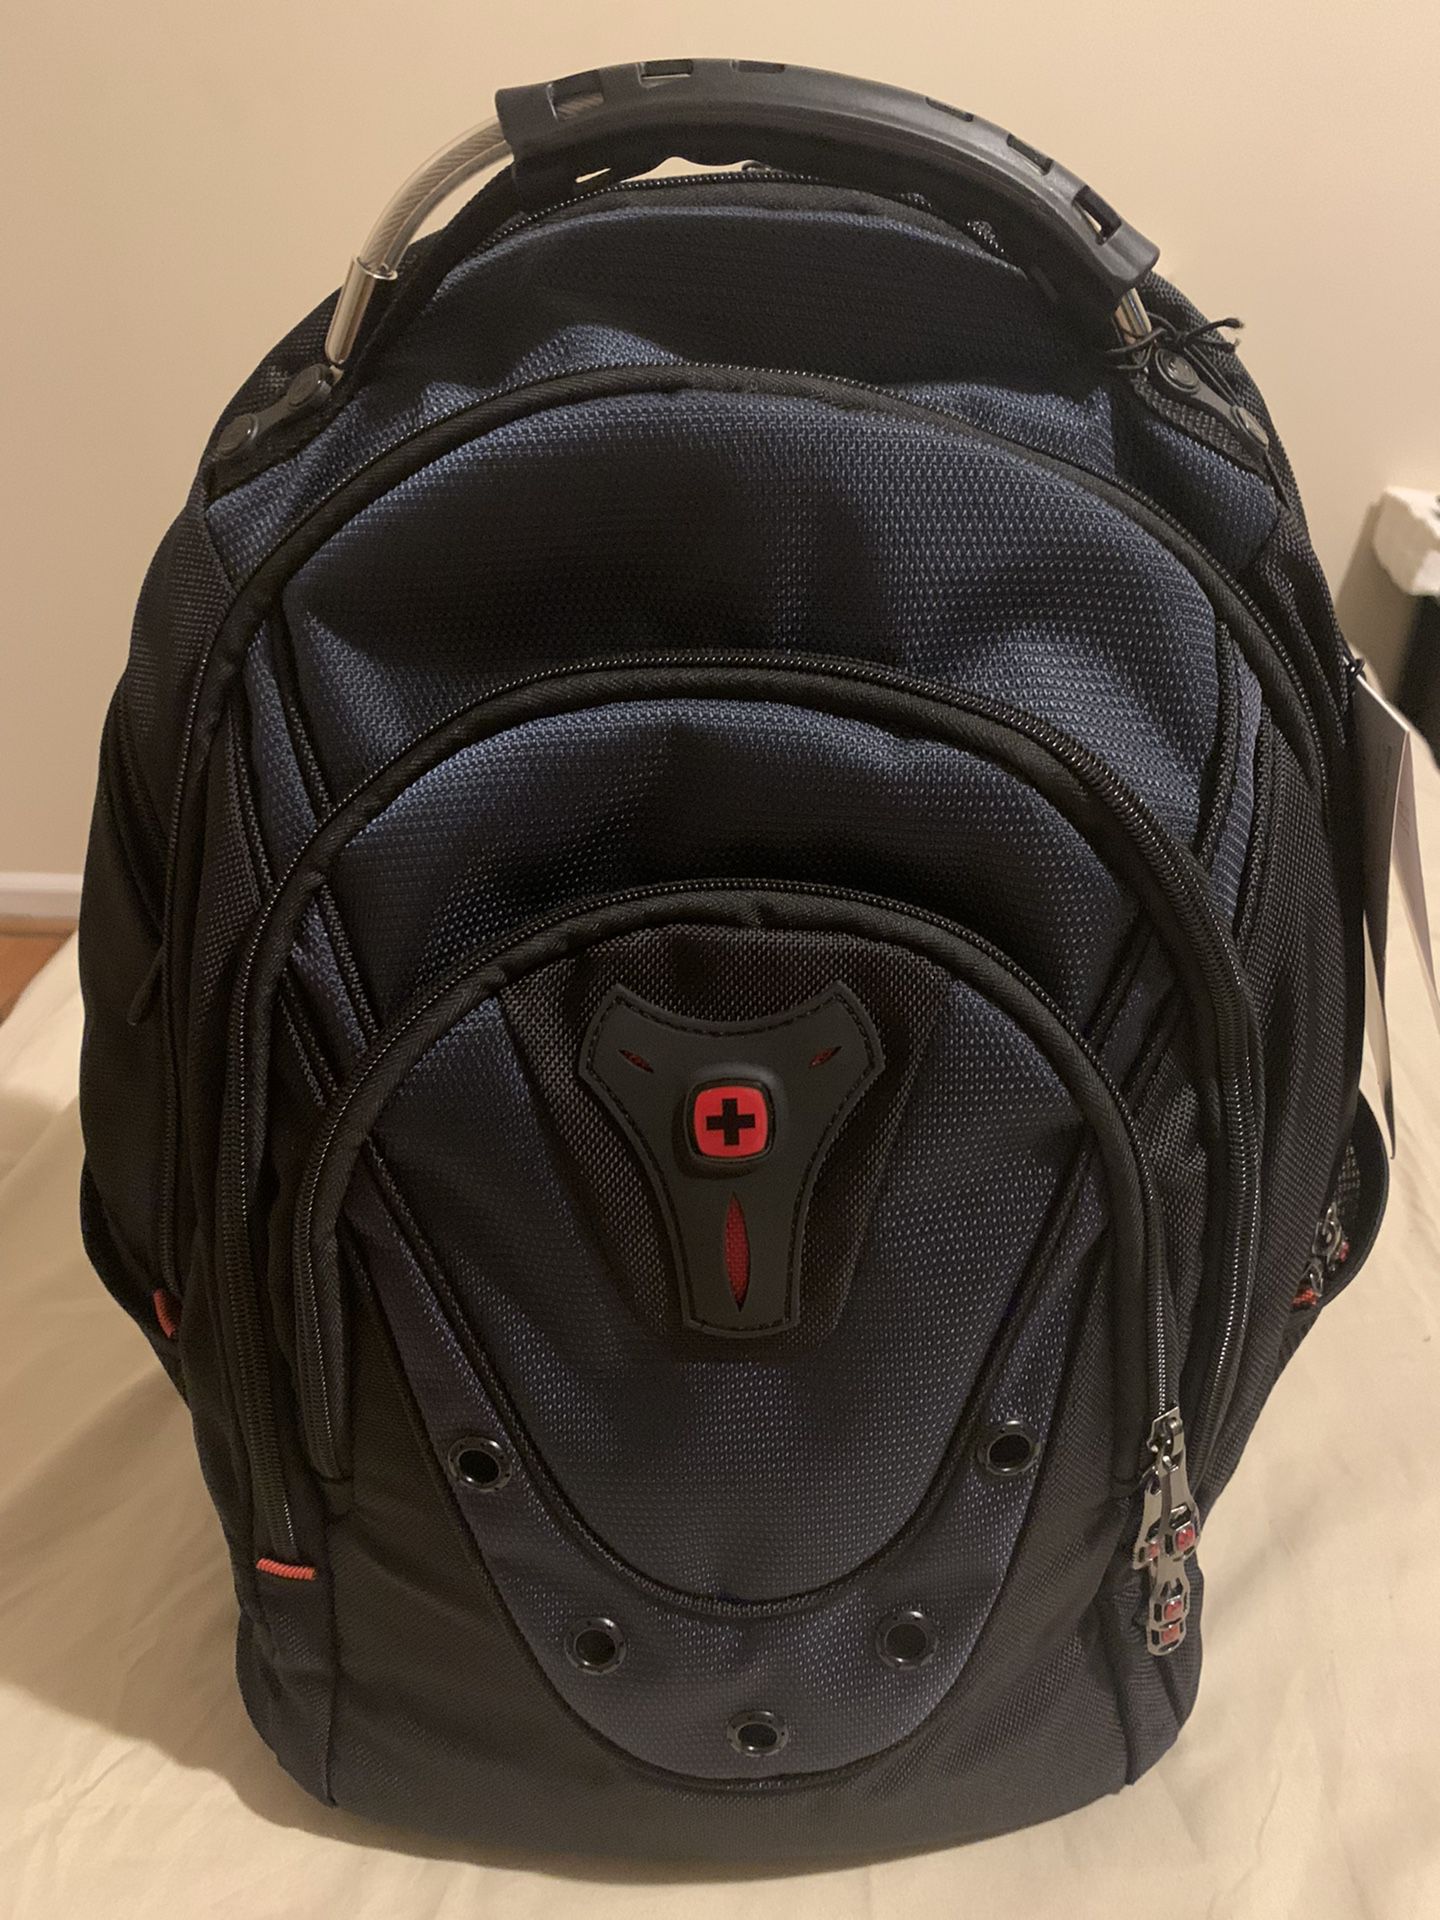 Wenger Ibex Pro25 Liter Backpack